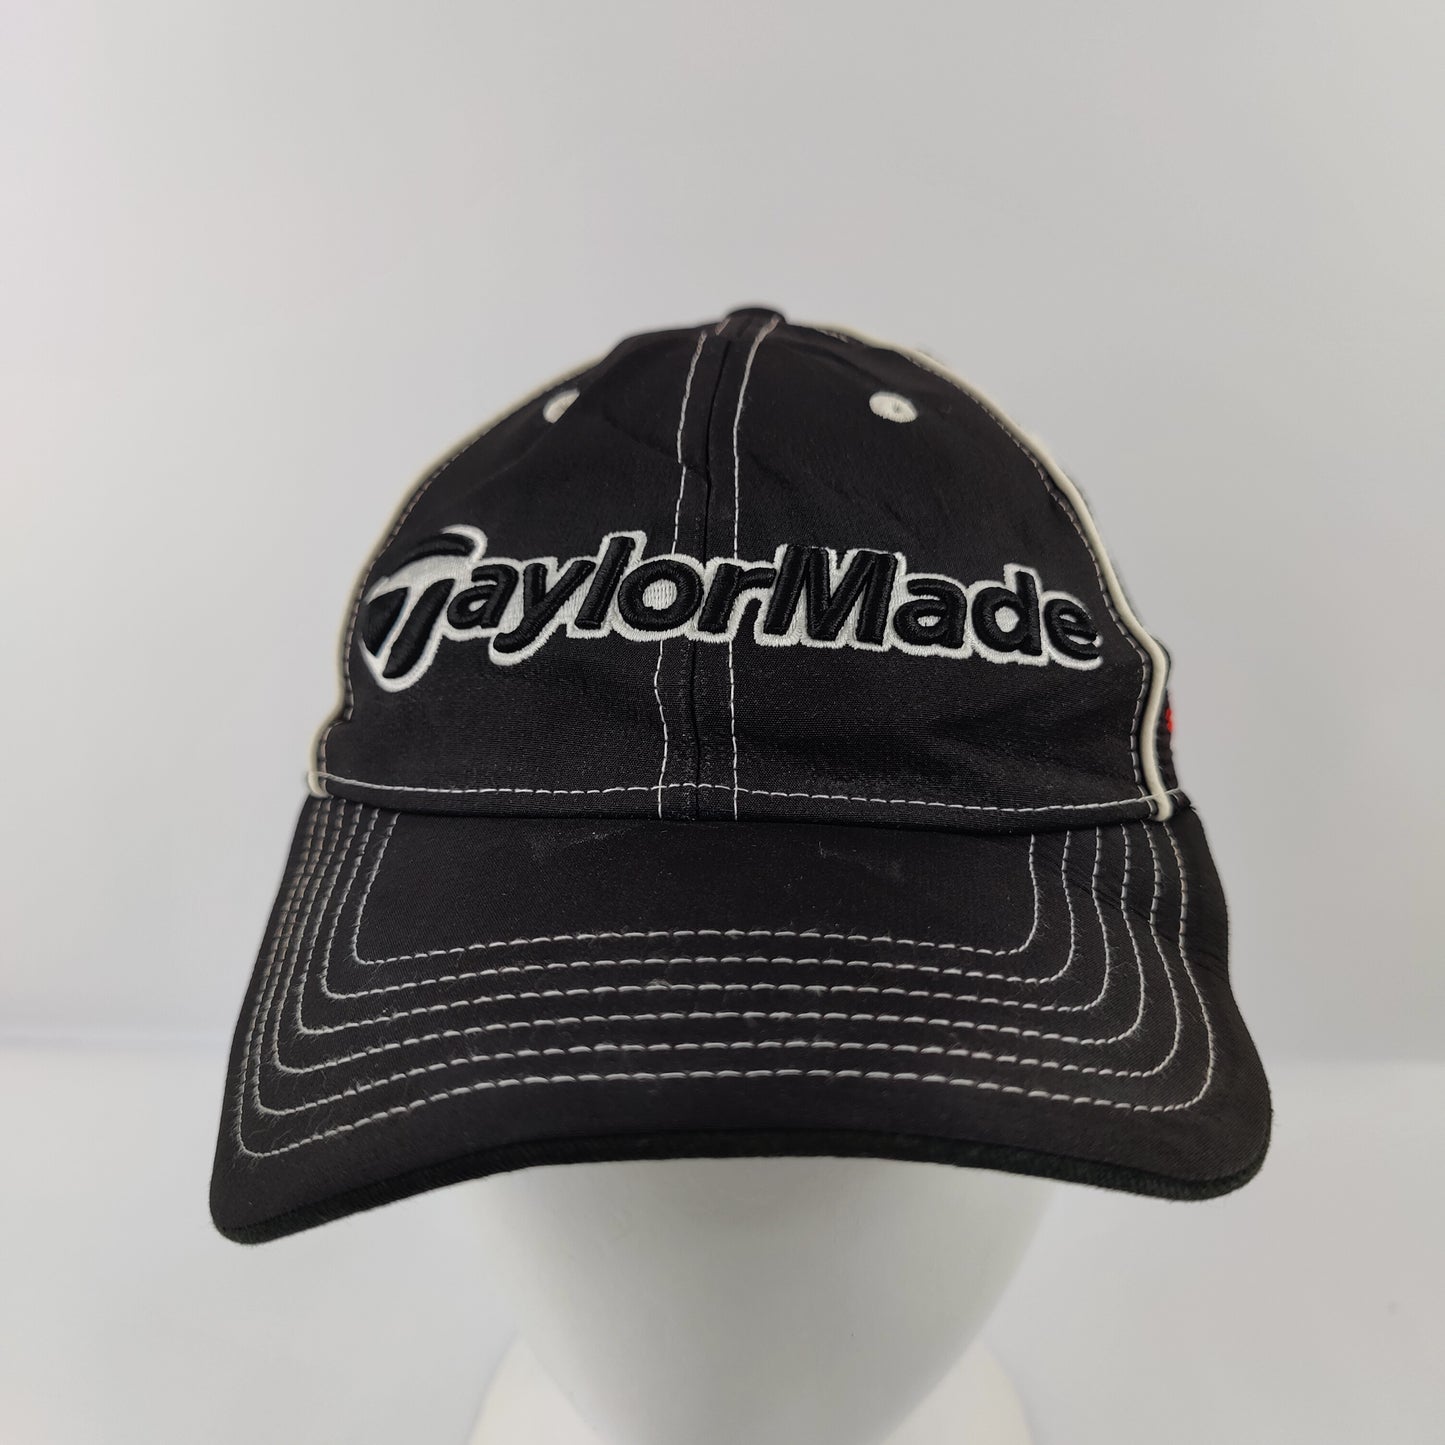 TaylorMade Golf Cap - Black - 1069